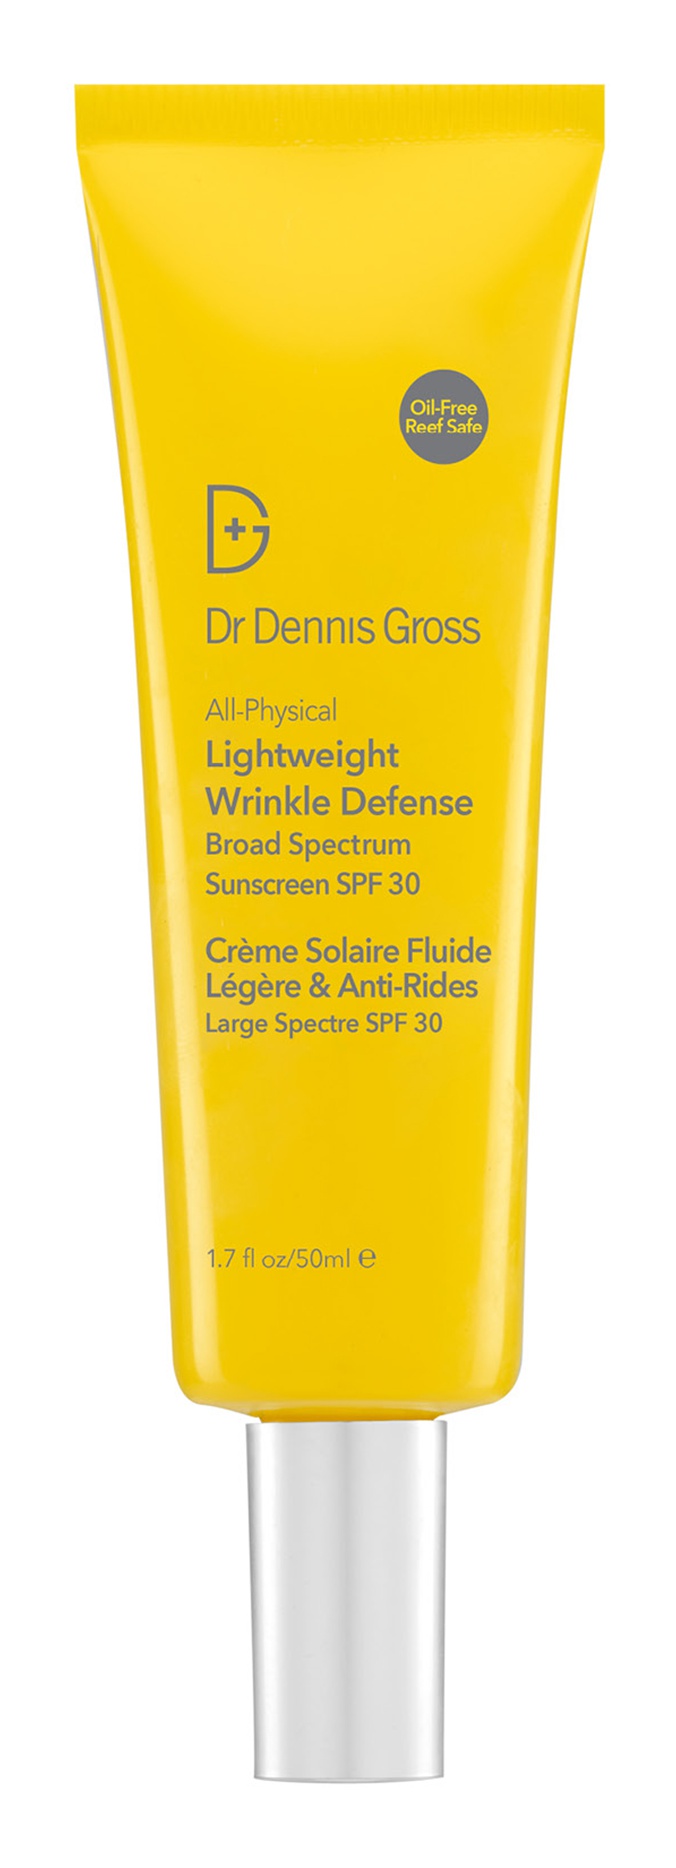 Dr Dennis Gross All Physical Lightweight Wrinkle Defense SPF